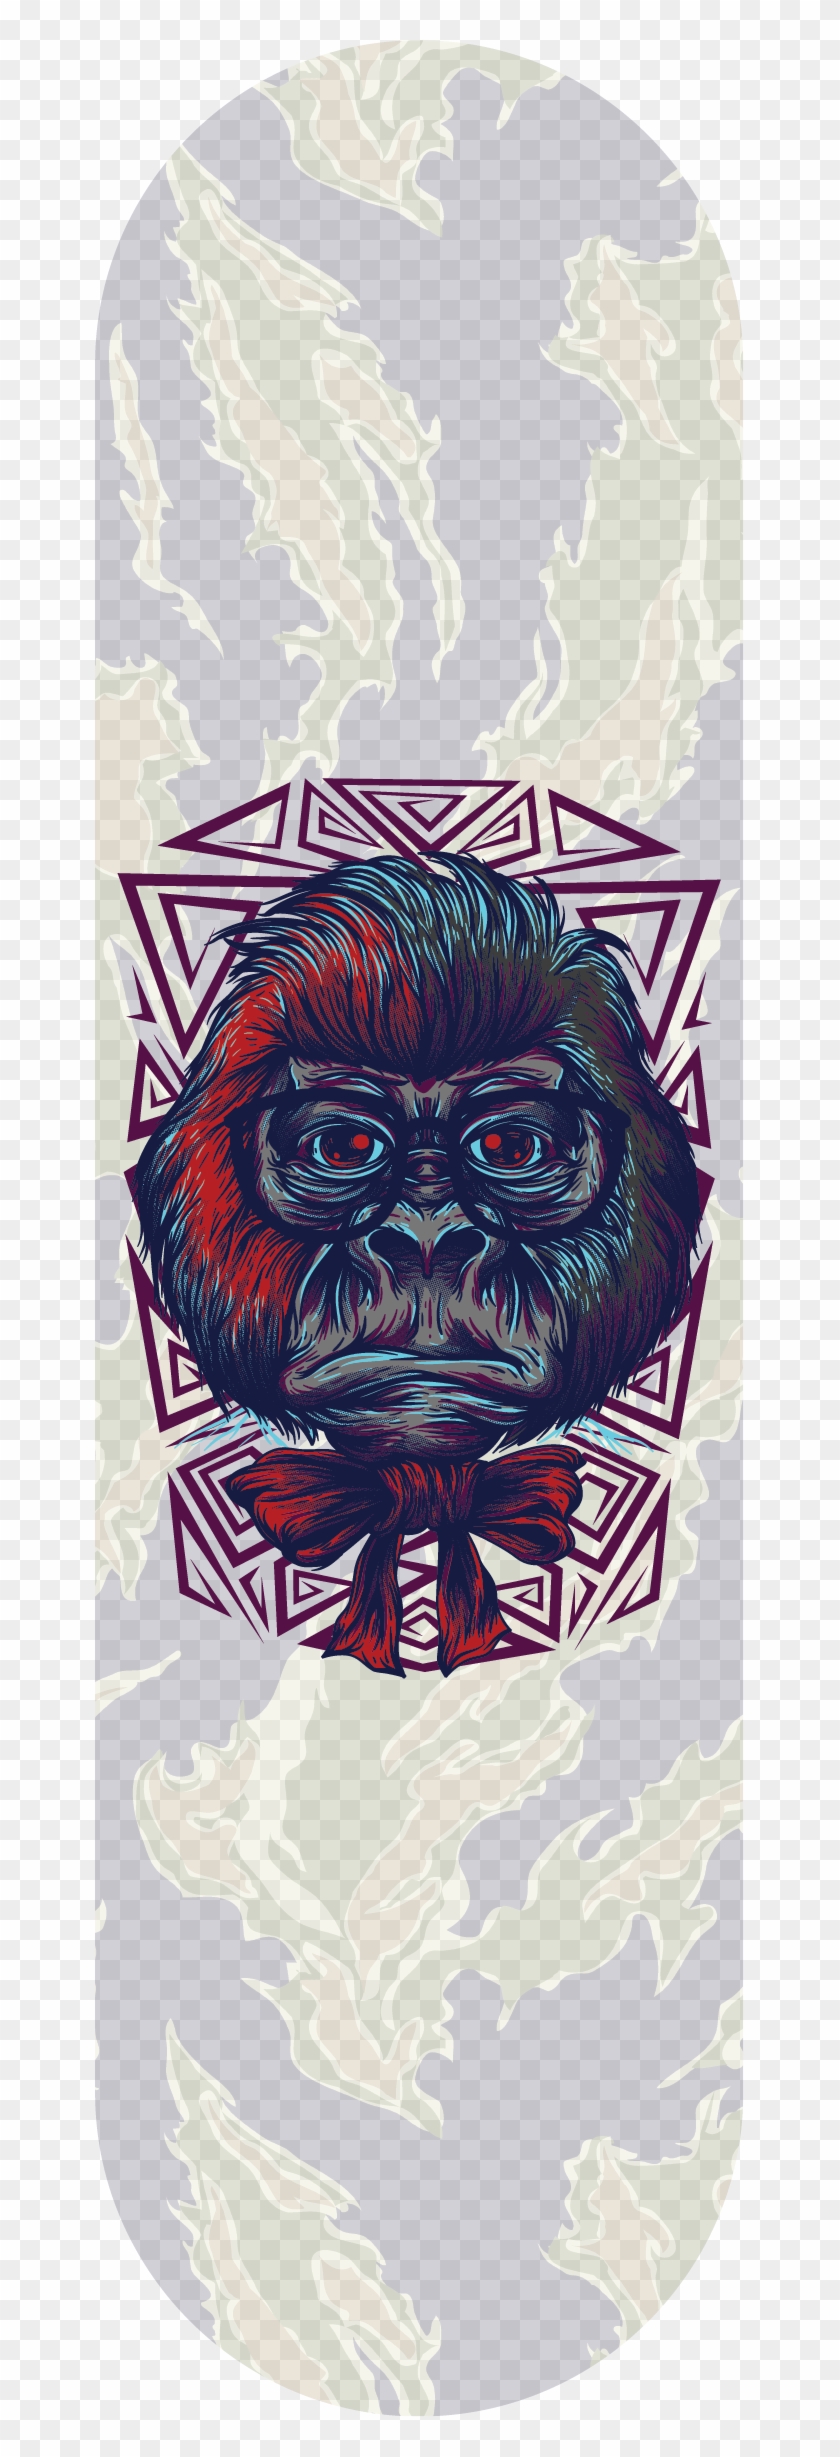 Classic Gorilla - Monkey Clipart #4791447